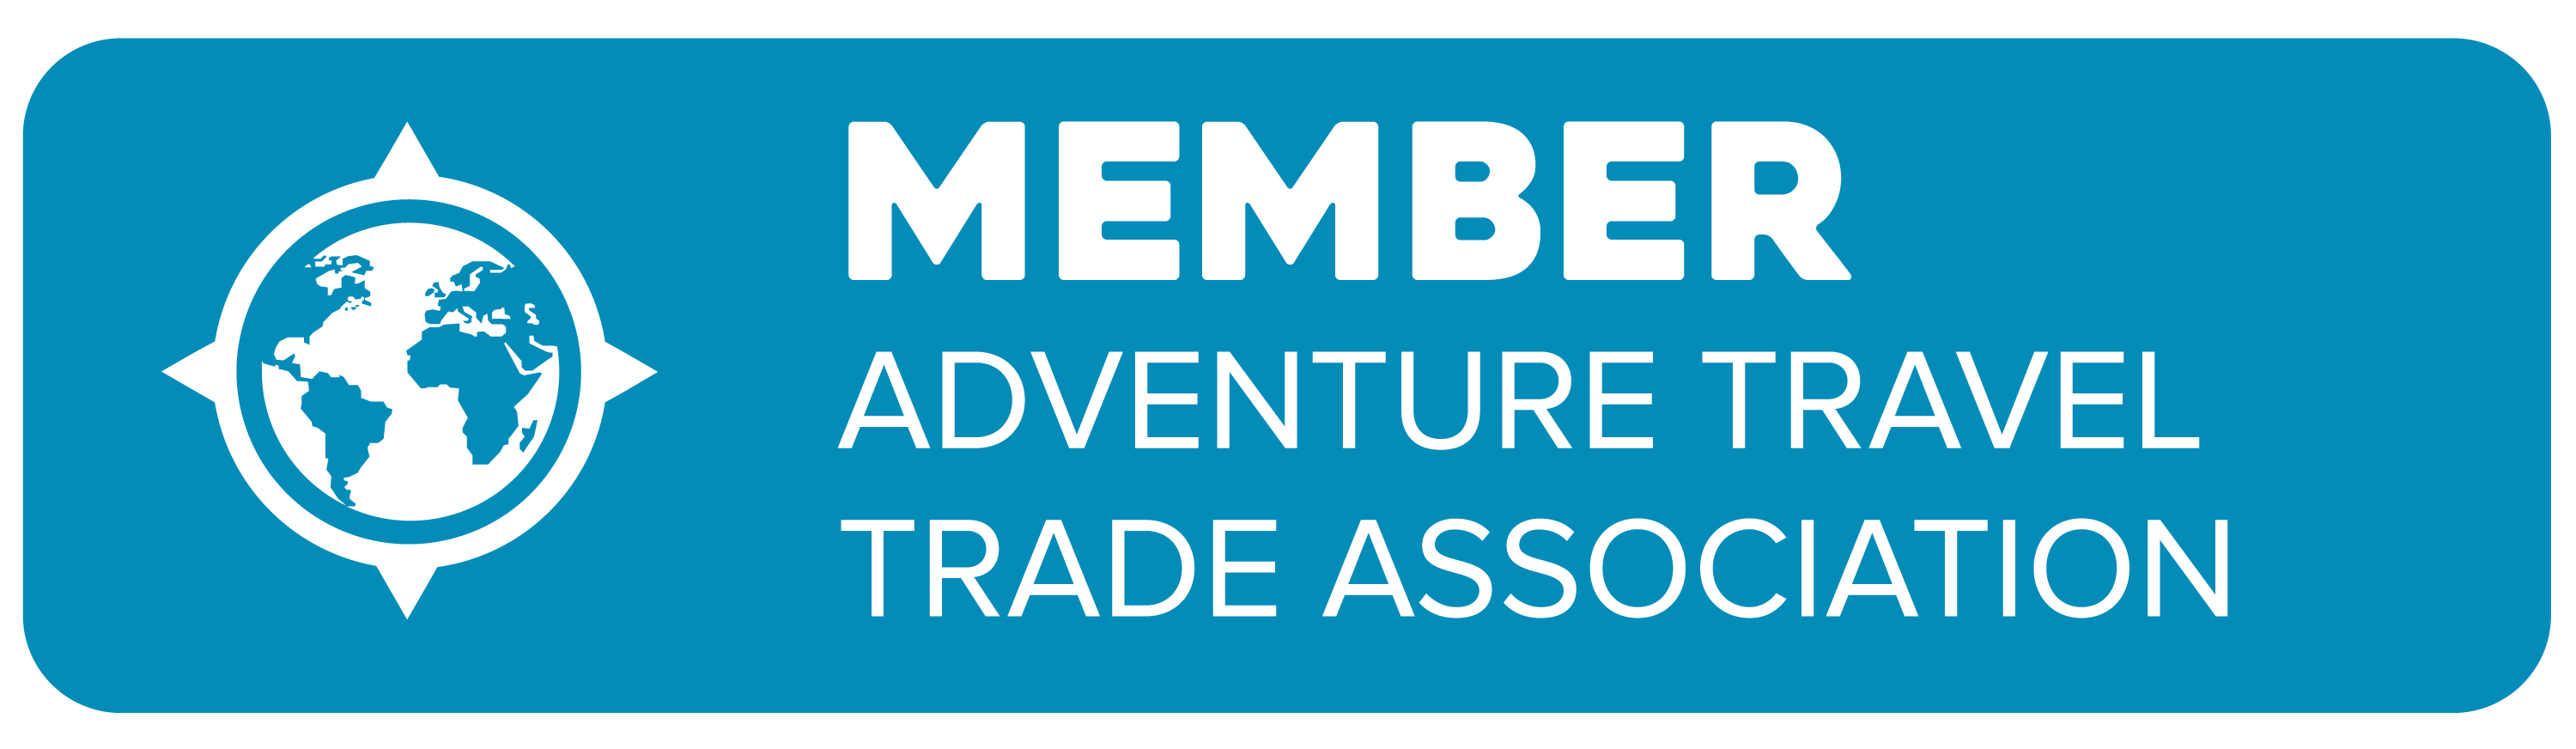 Atta member badge logo.